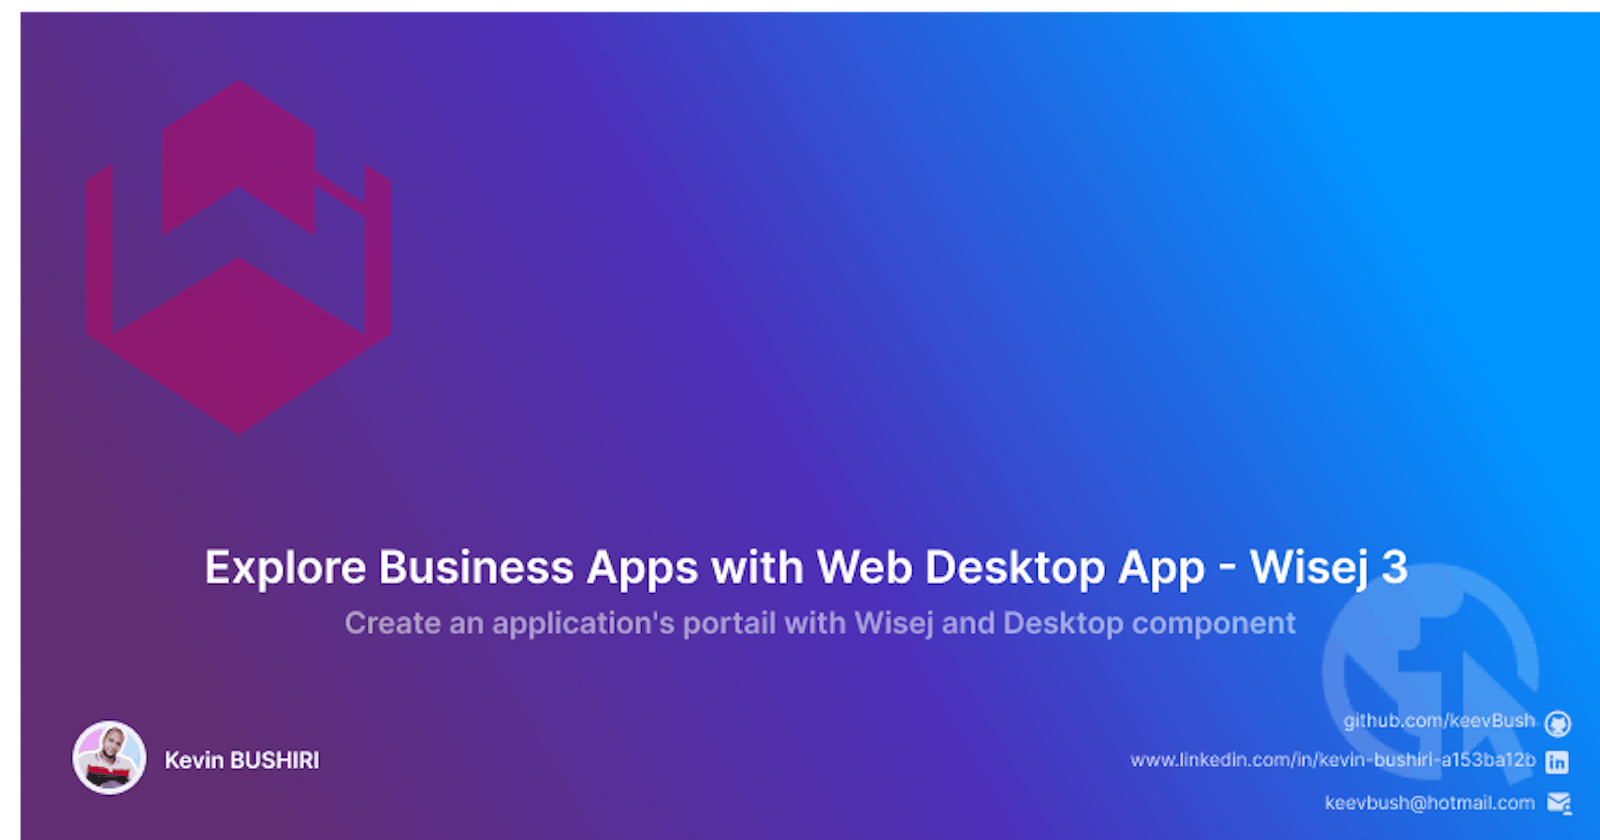 Explore Business Apps with Web Desktop App - Wisej 3